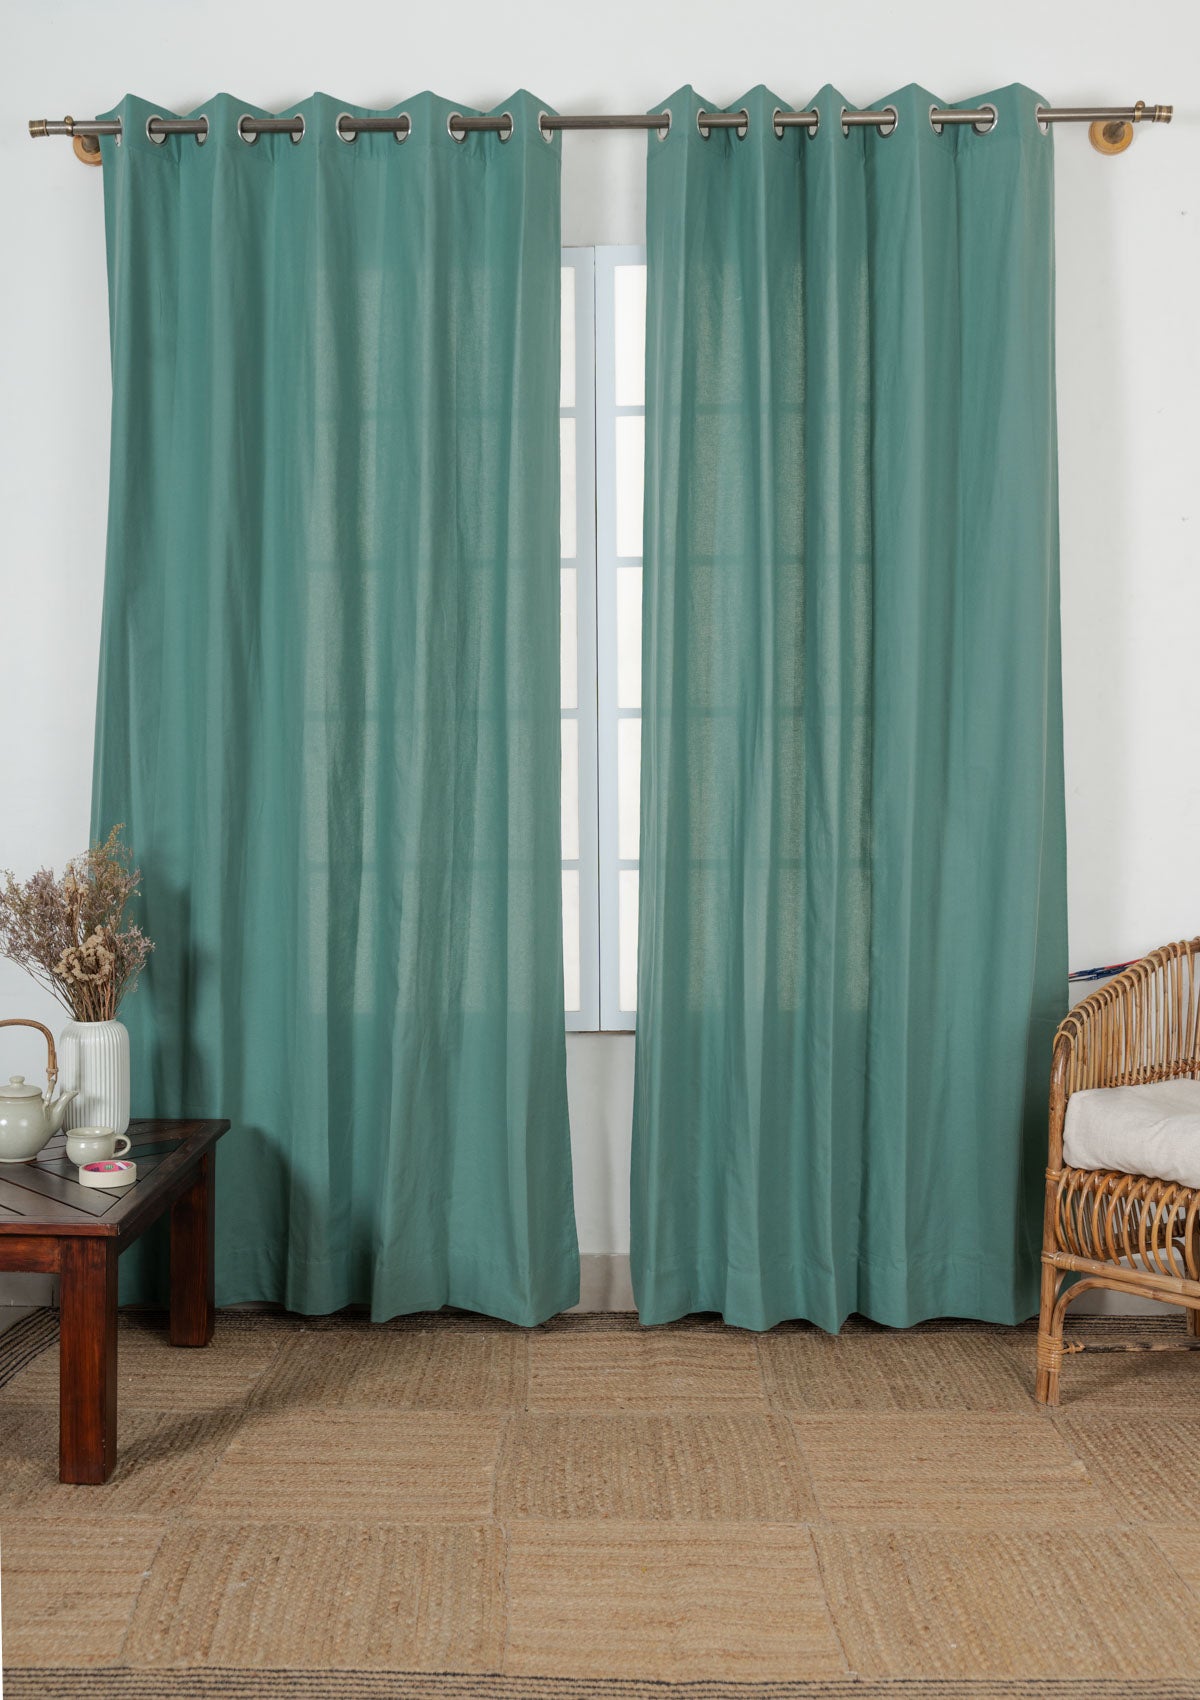 Solid aqua blue 100% cotton plain curtain for bedroom - Room darkening - Single